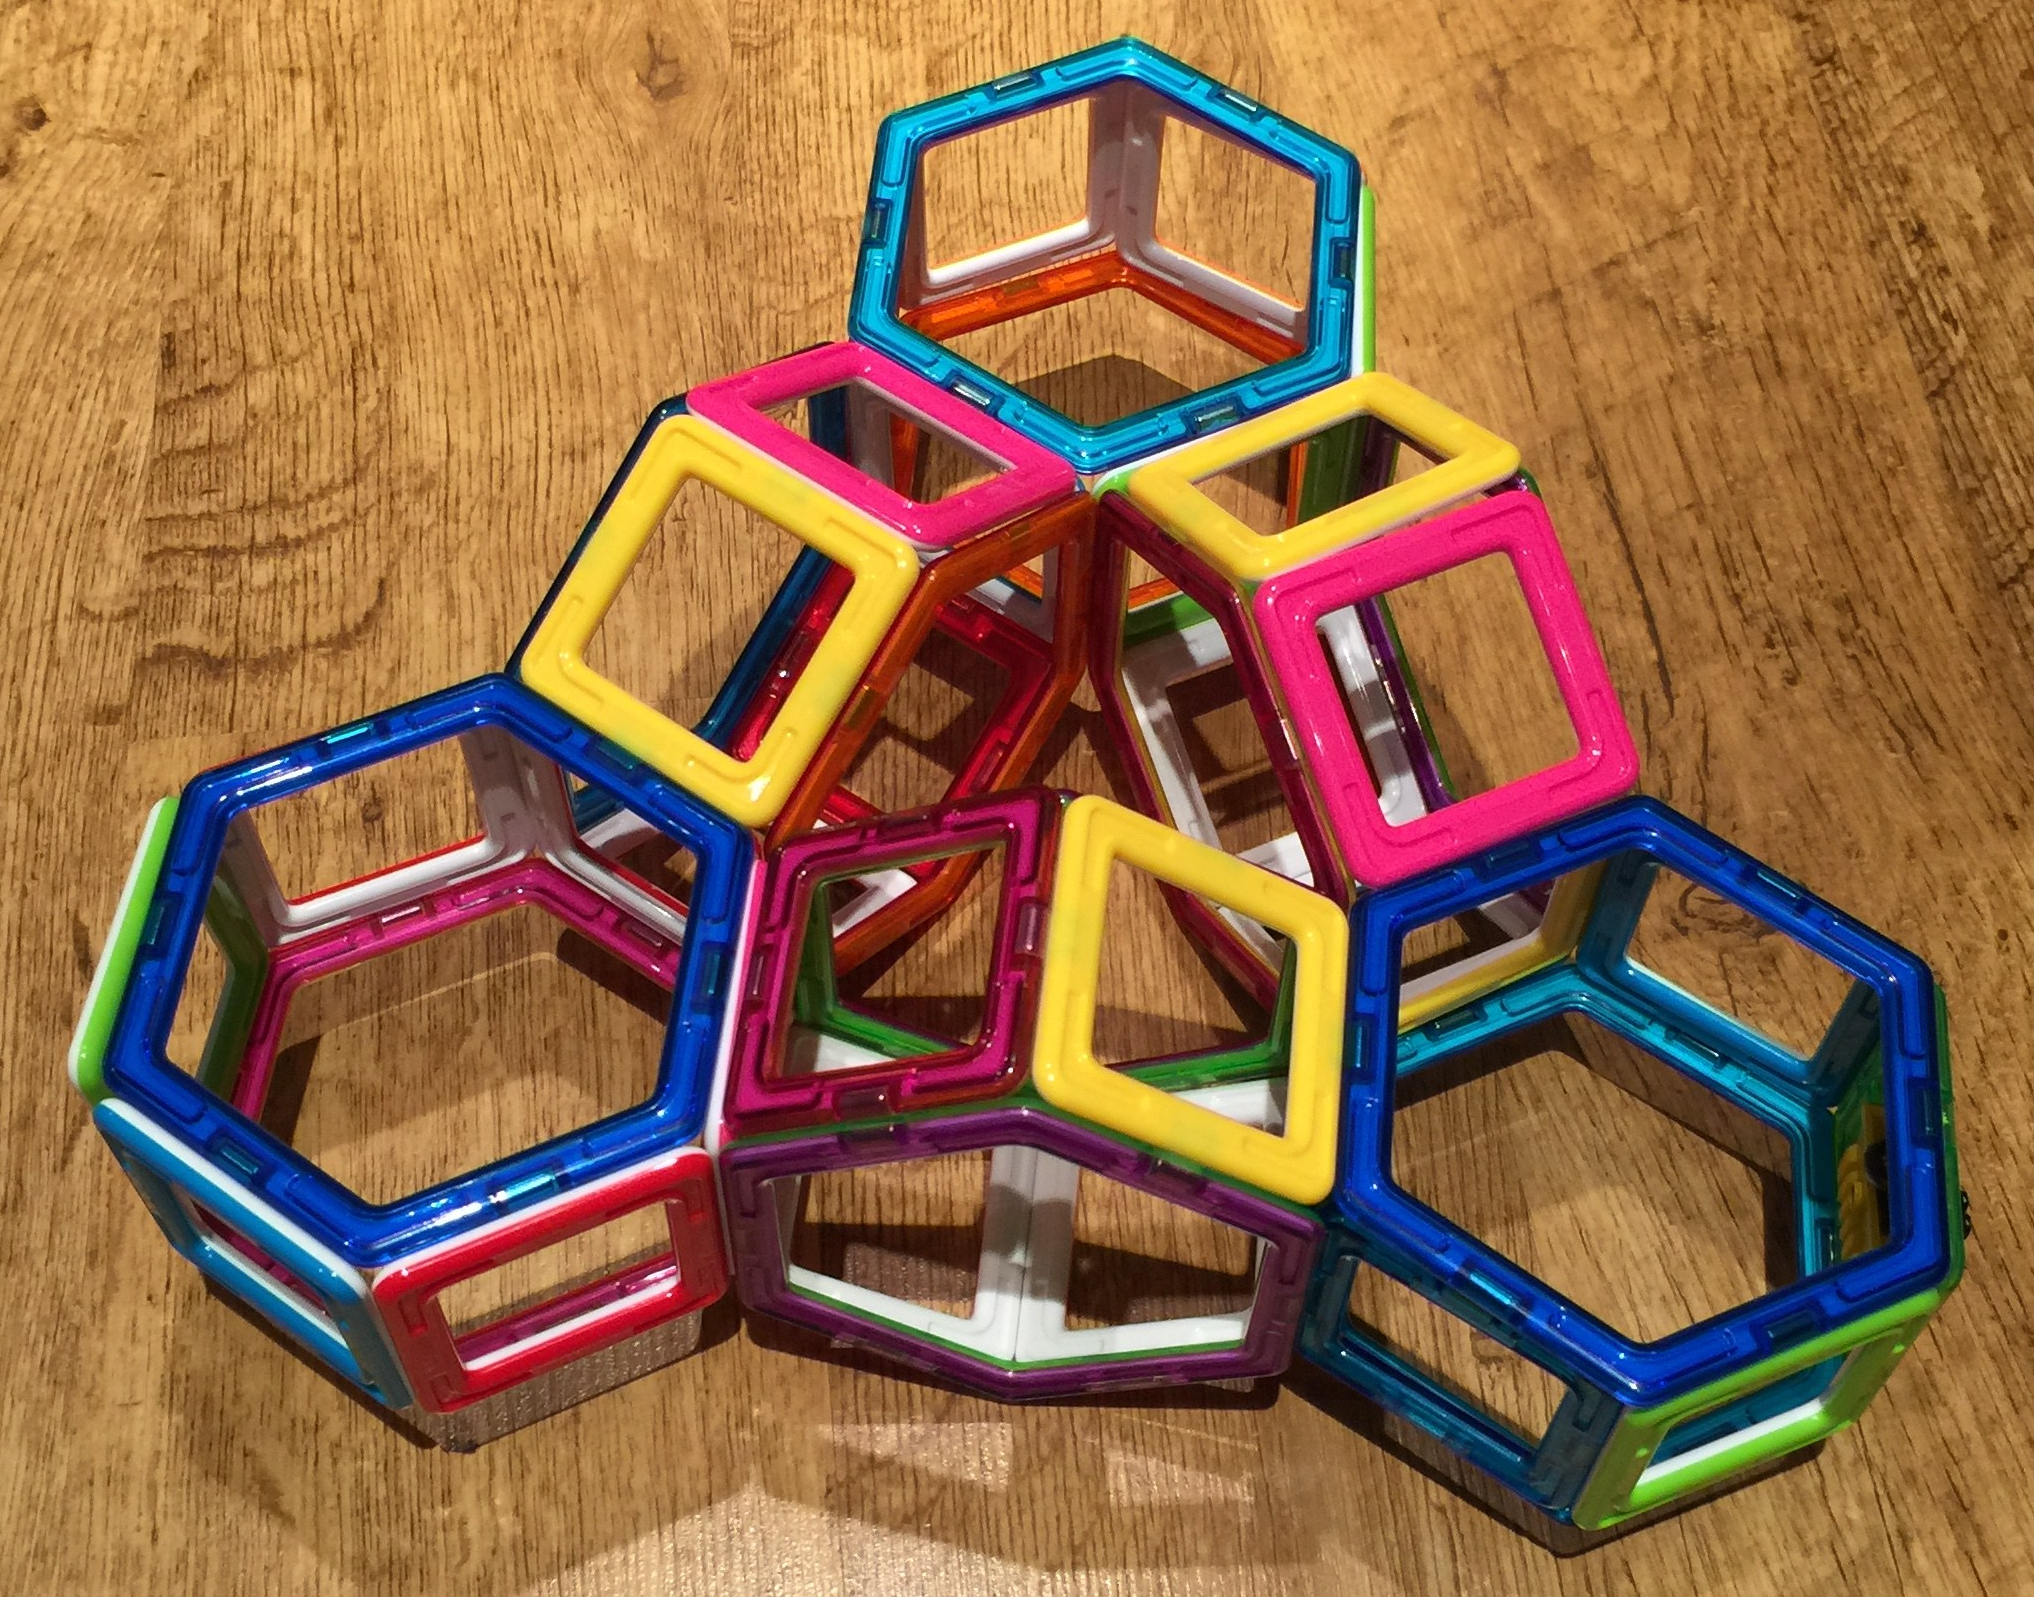 Ring of hexagonal prisms